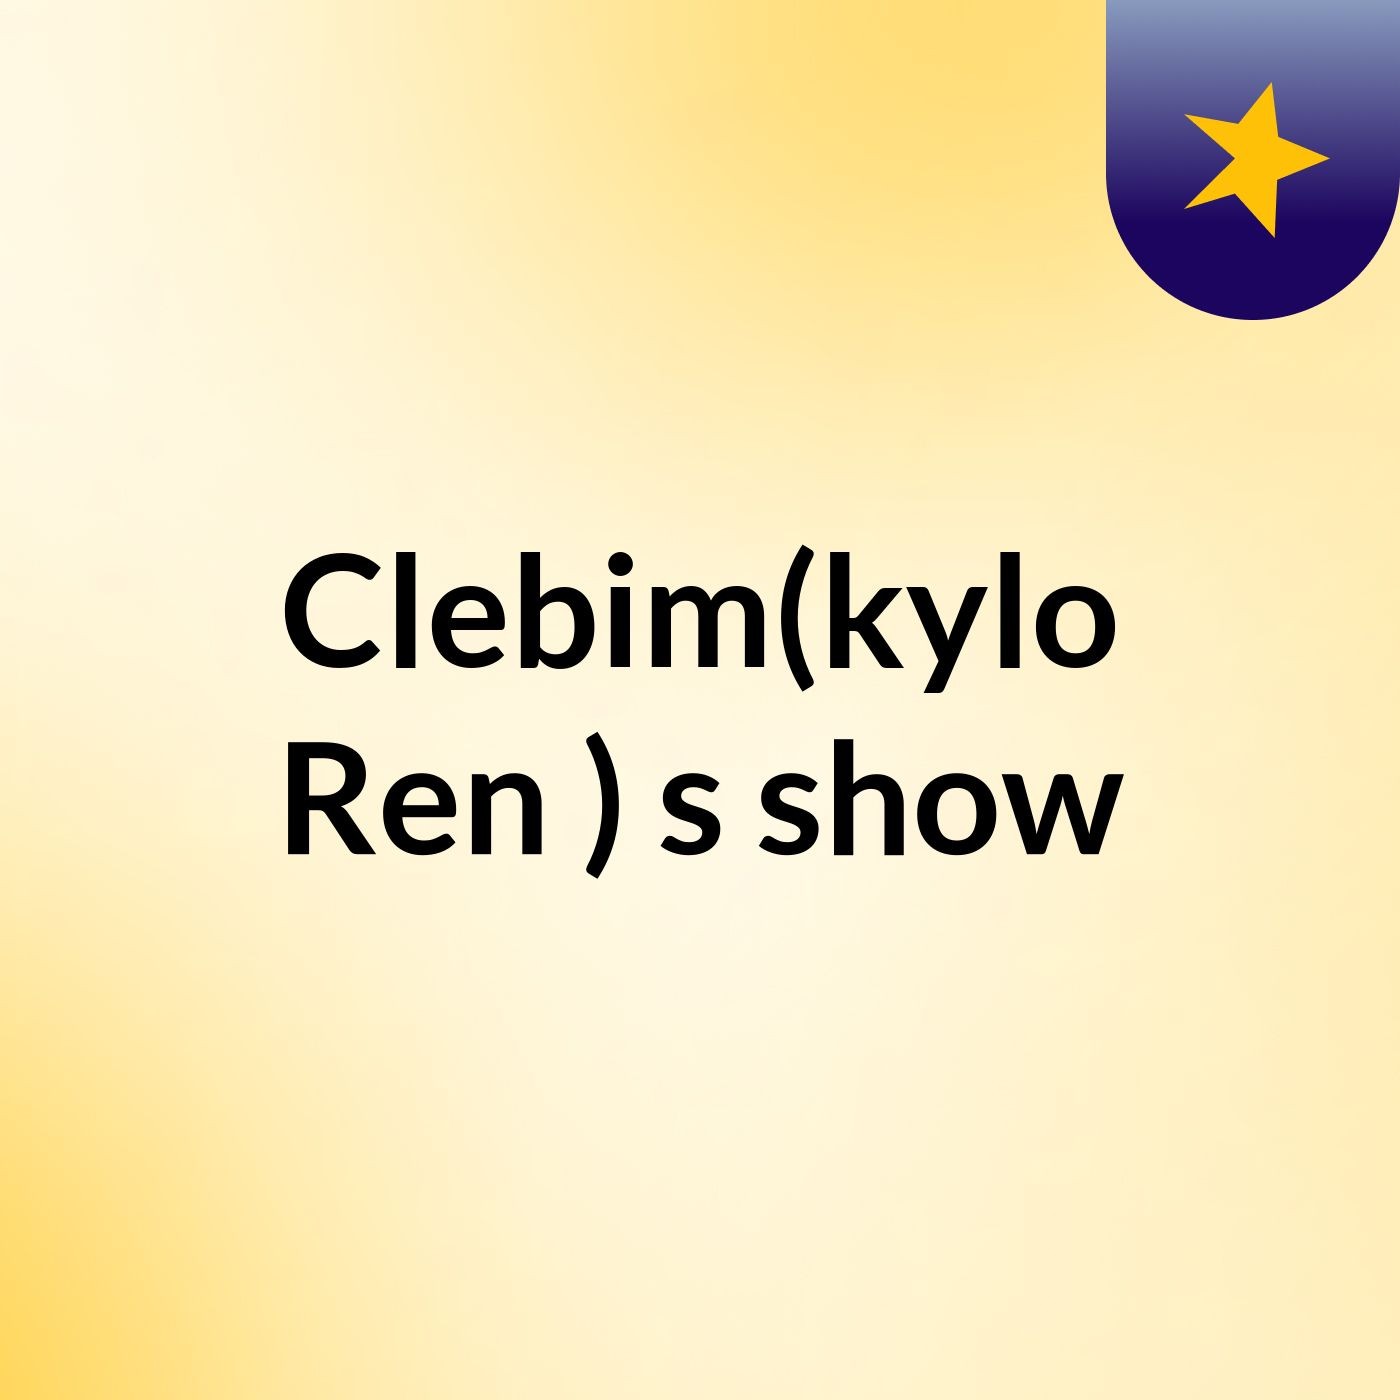 Clebim(kylo Ren )'s show